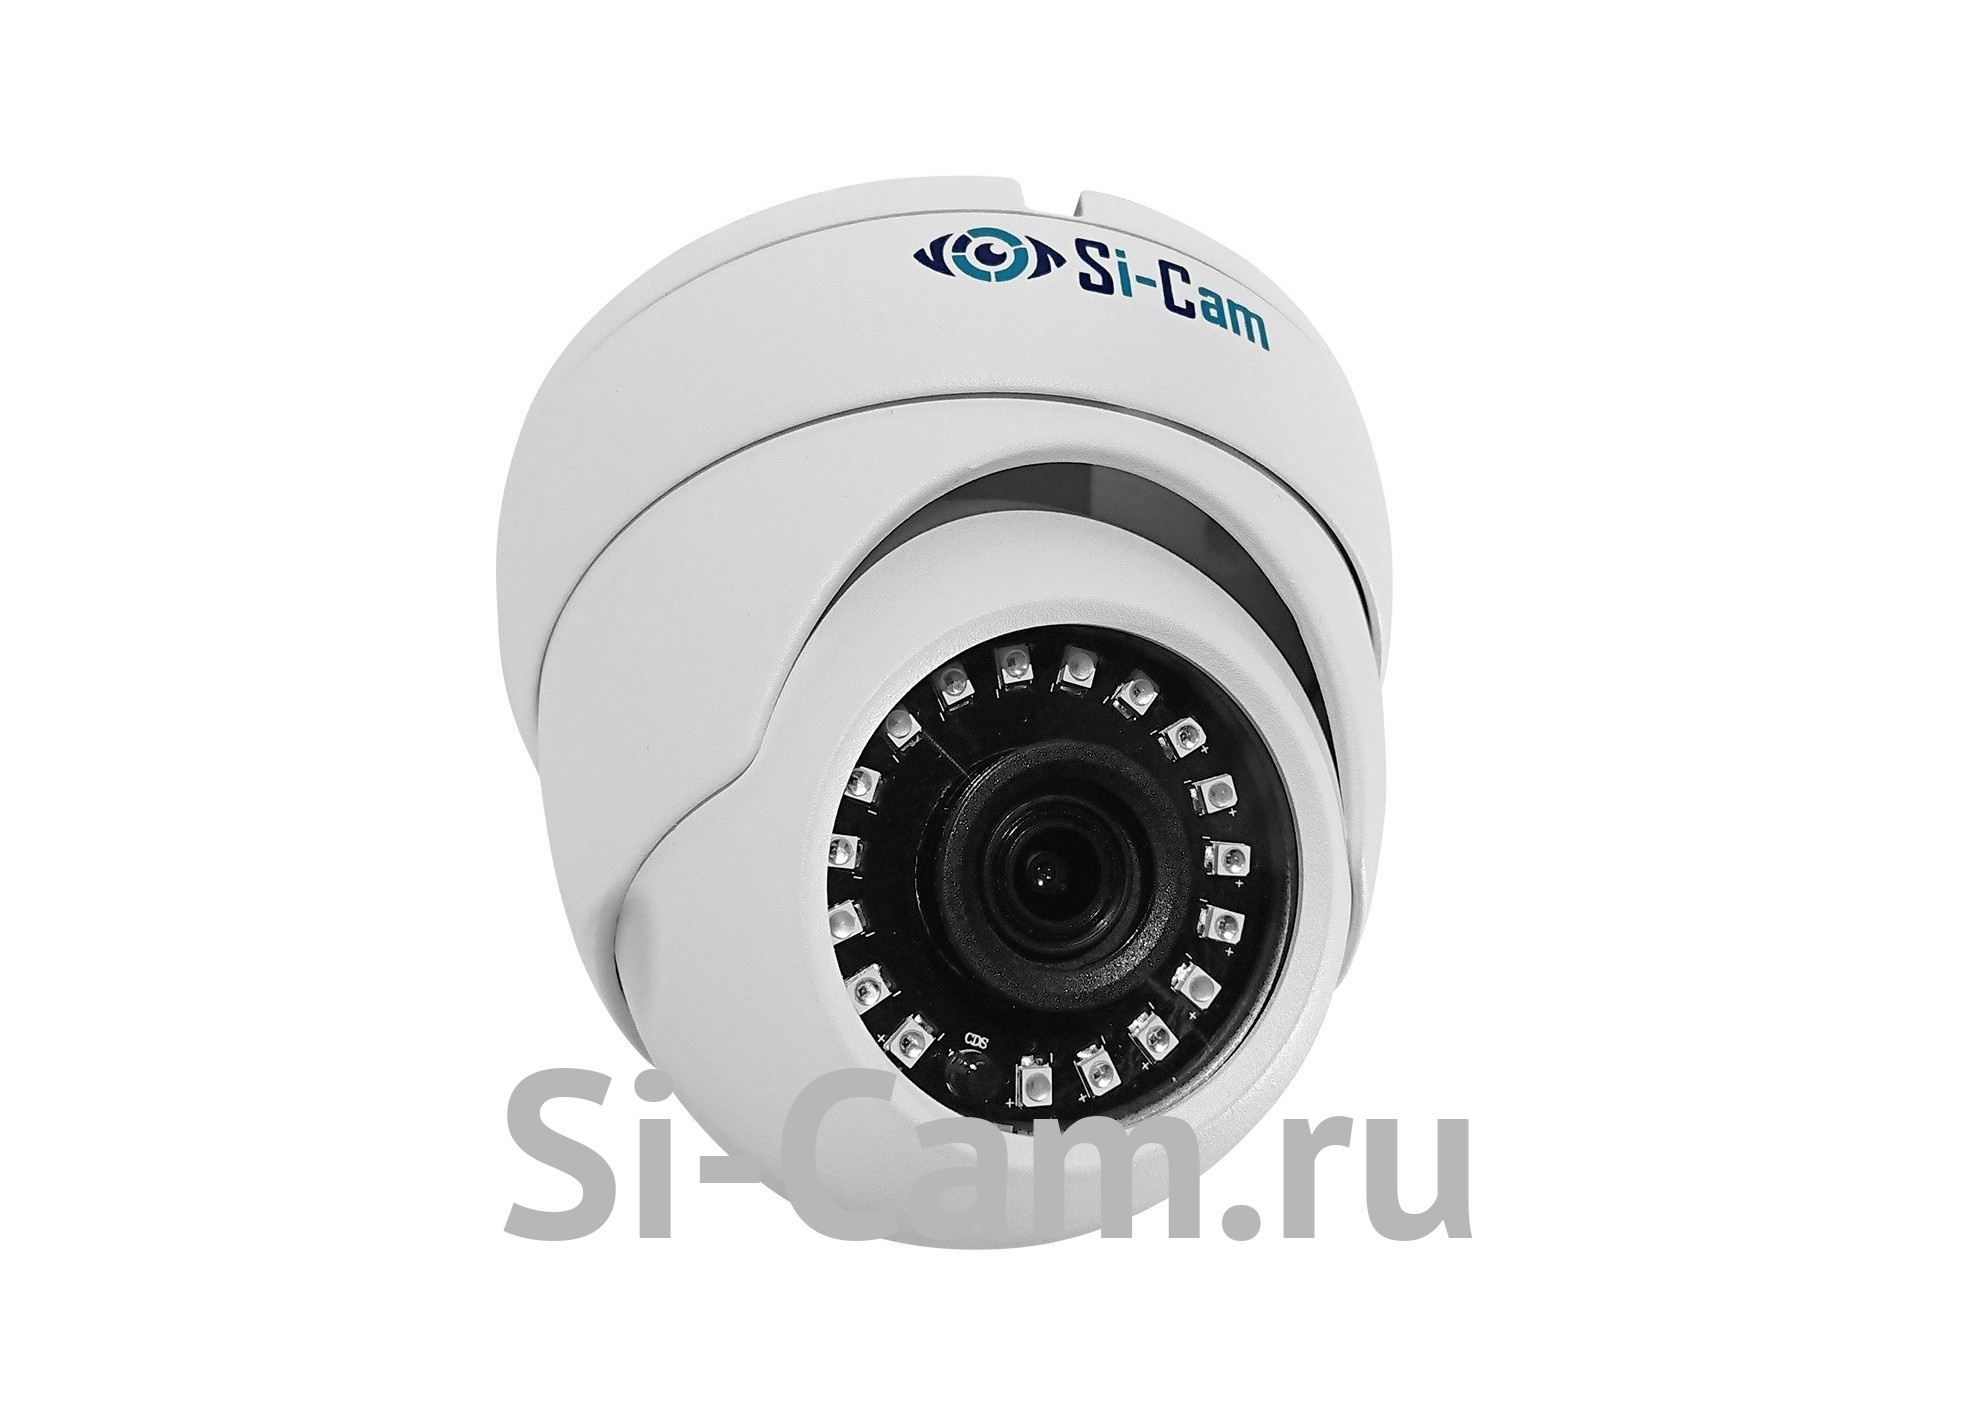 Si-Cam SC-HL402F IR Купольная уличная антивандальная AHD видеокамера  (4Mpx, 2592x1520)